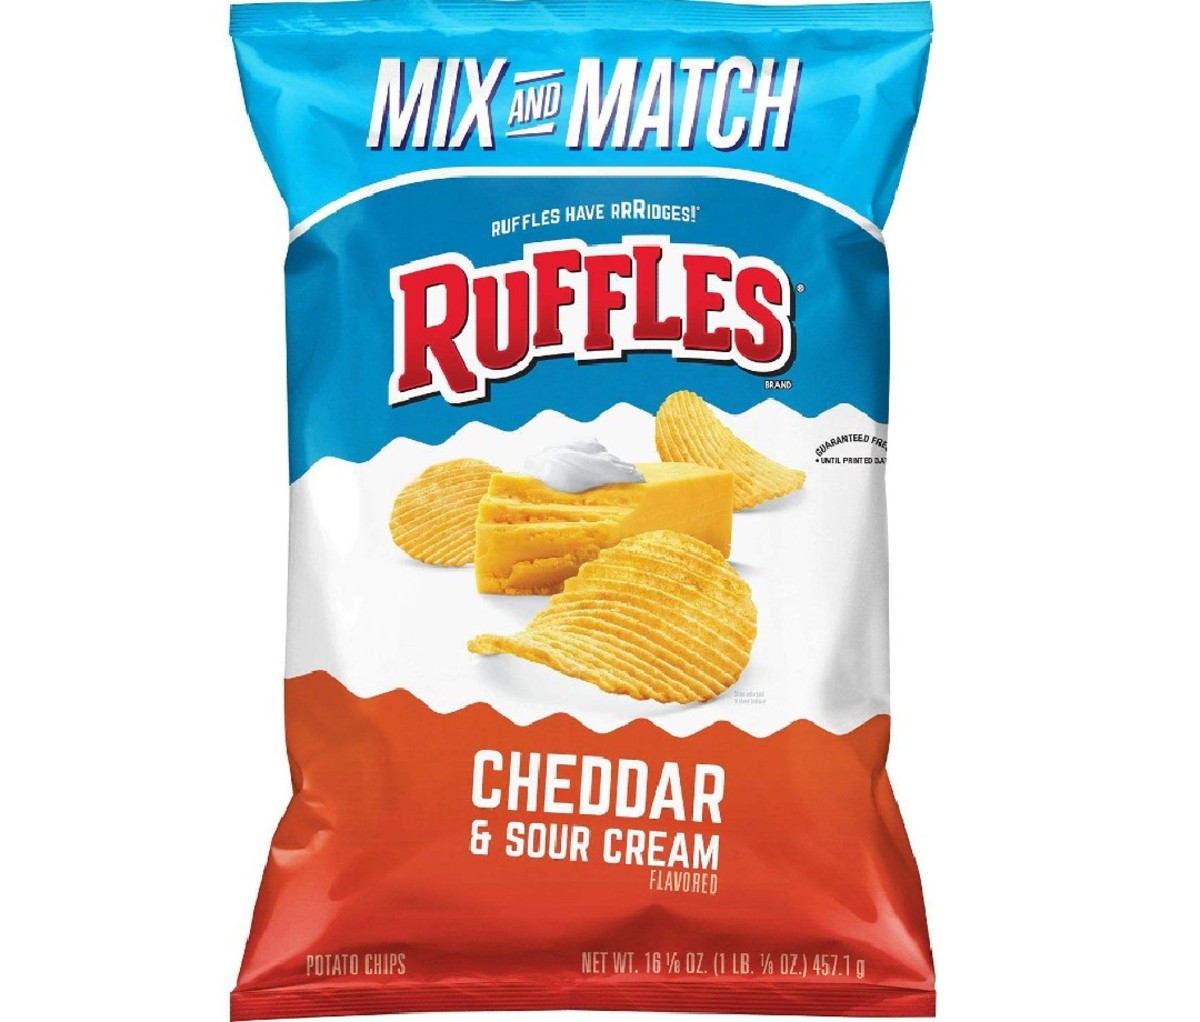 Bag of Ruffles Cheddar & Sour Cream potato chips